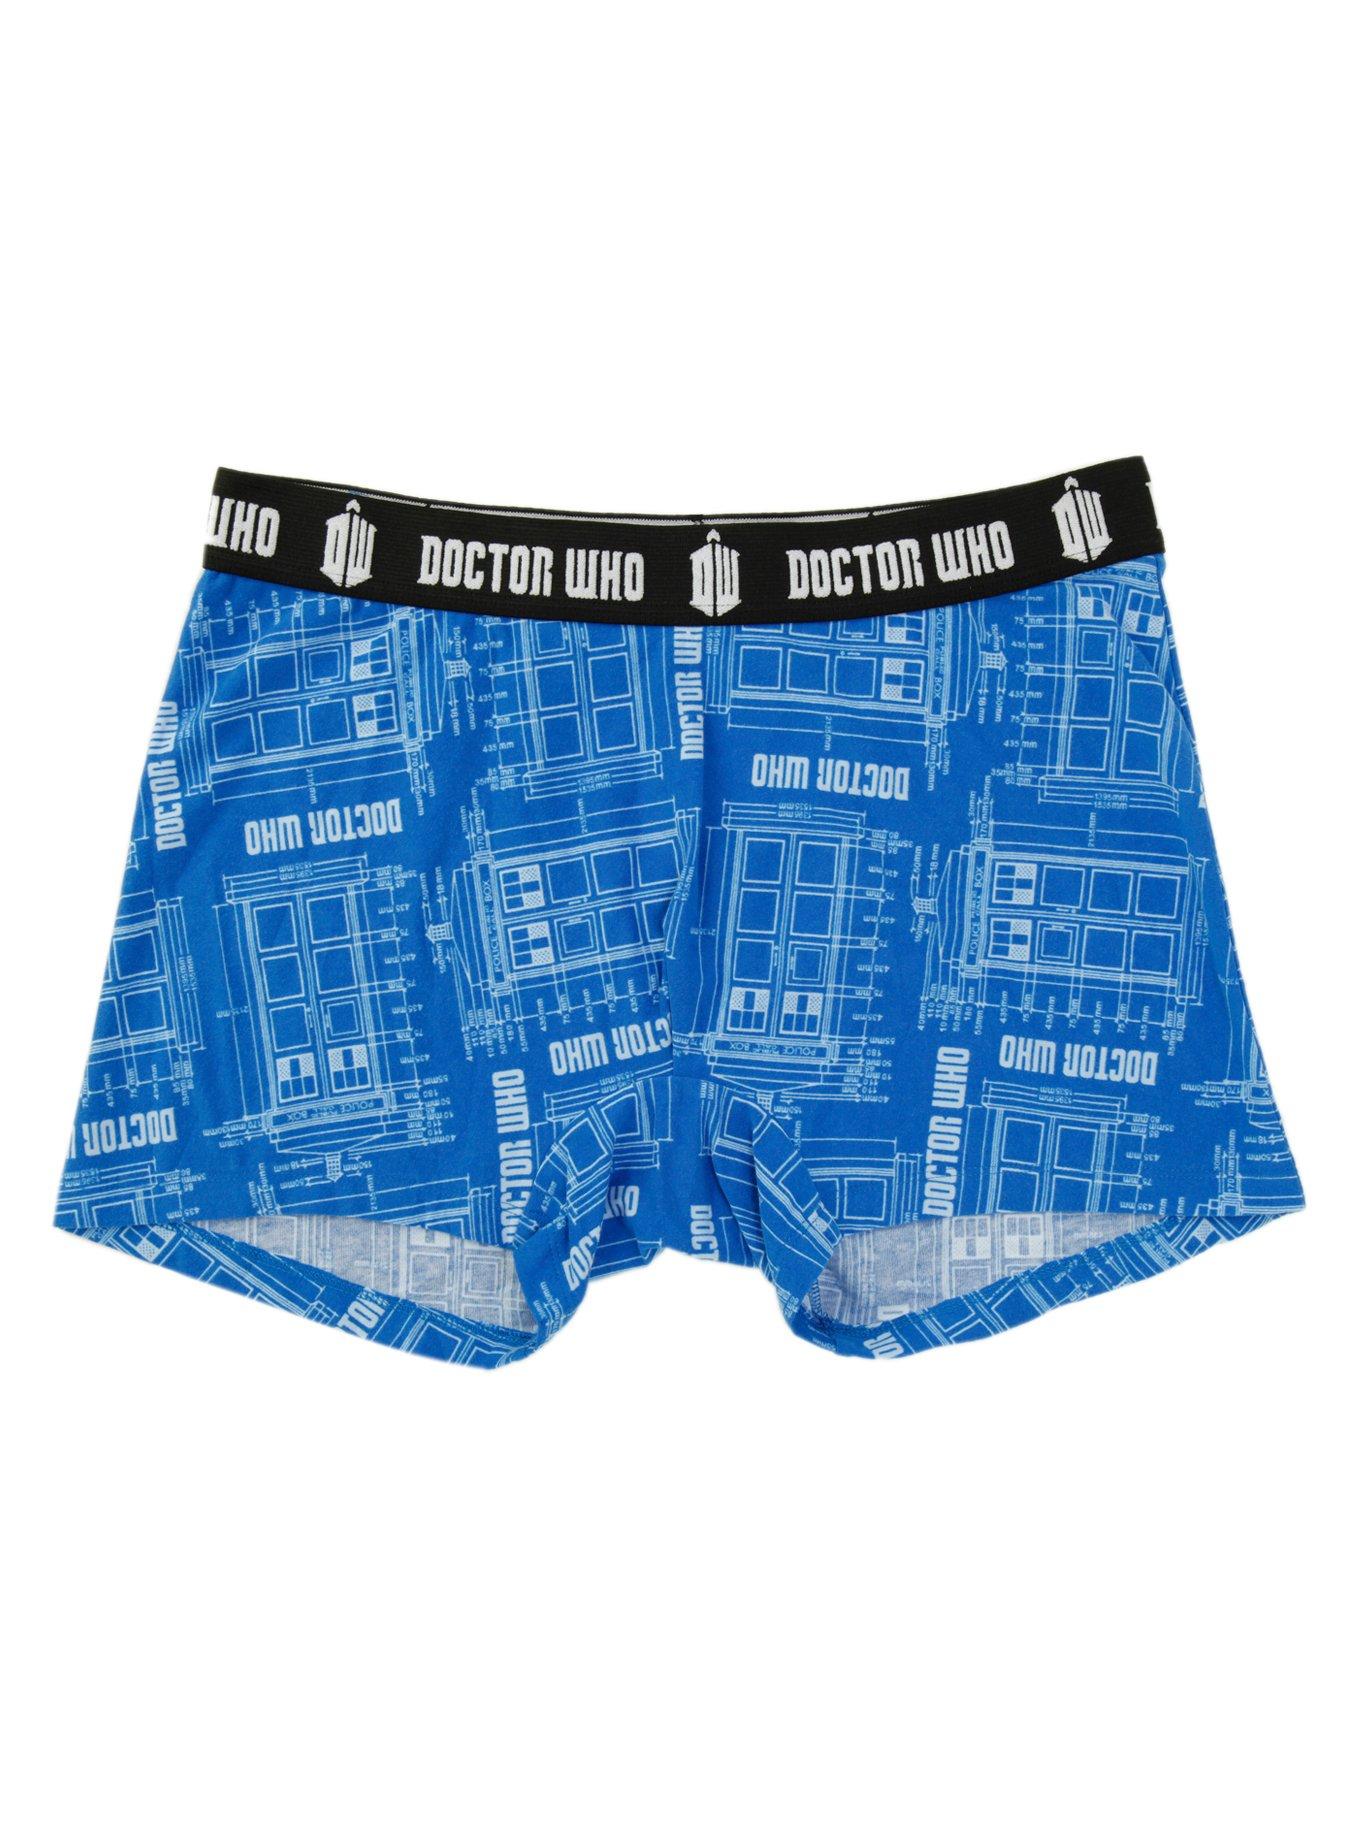 Doctor Who TARDIS Schematic Boxer Briefs, BLACK, hi-res